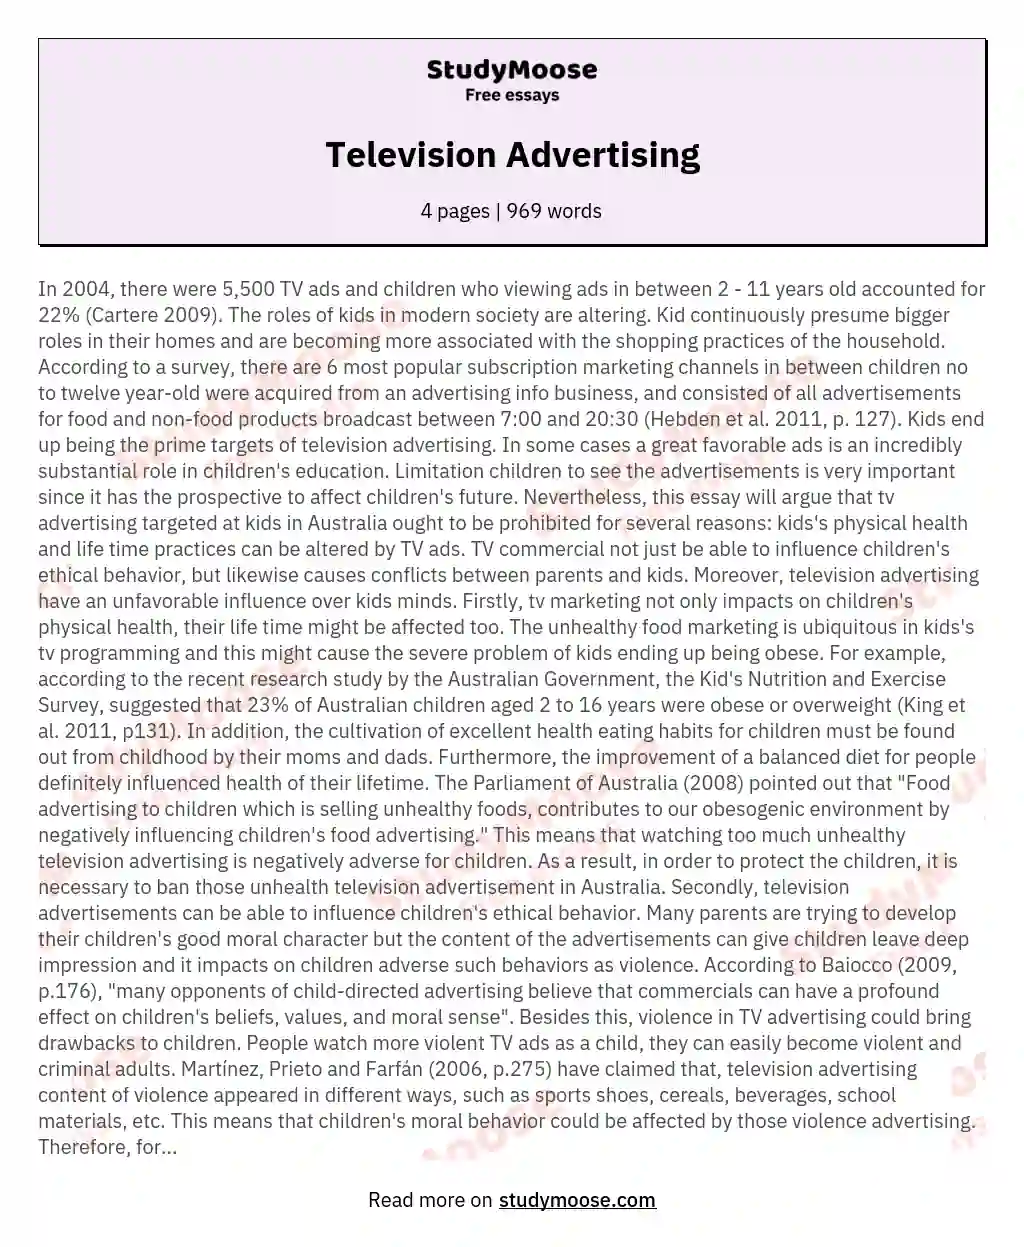 Tthe Prohibition of Television Advertising Targeting Children in Australia essay